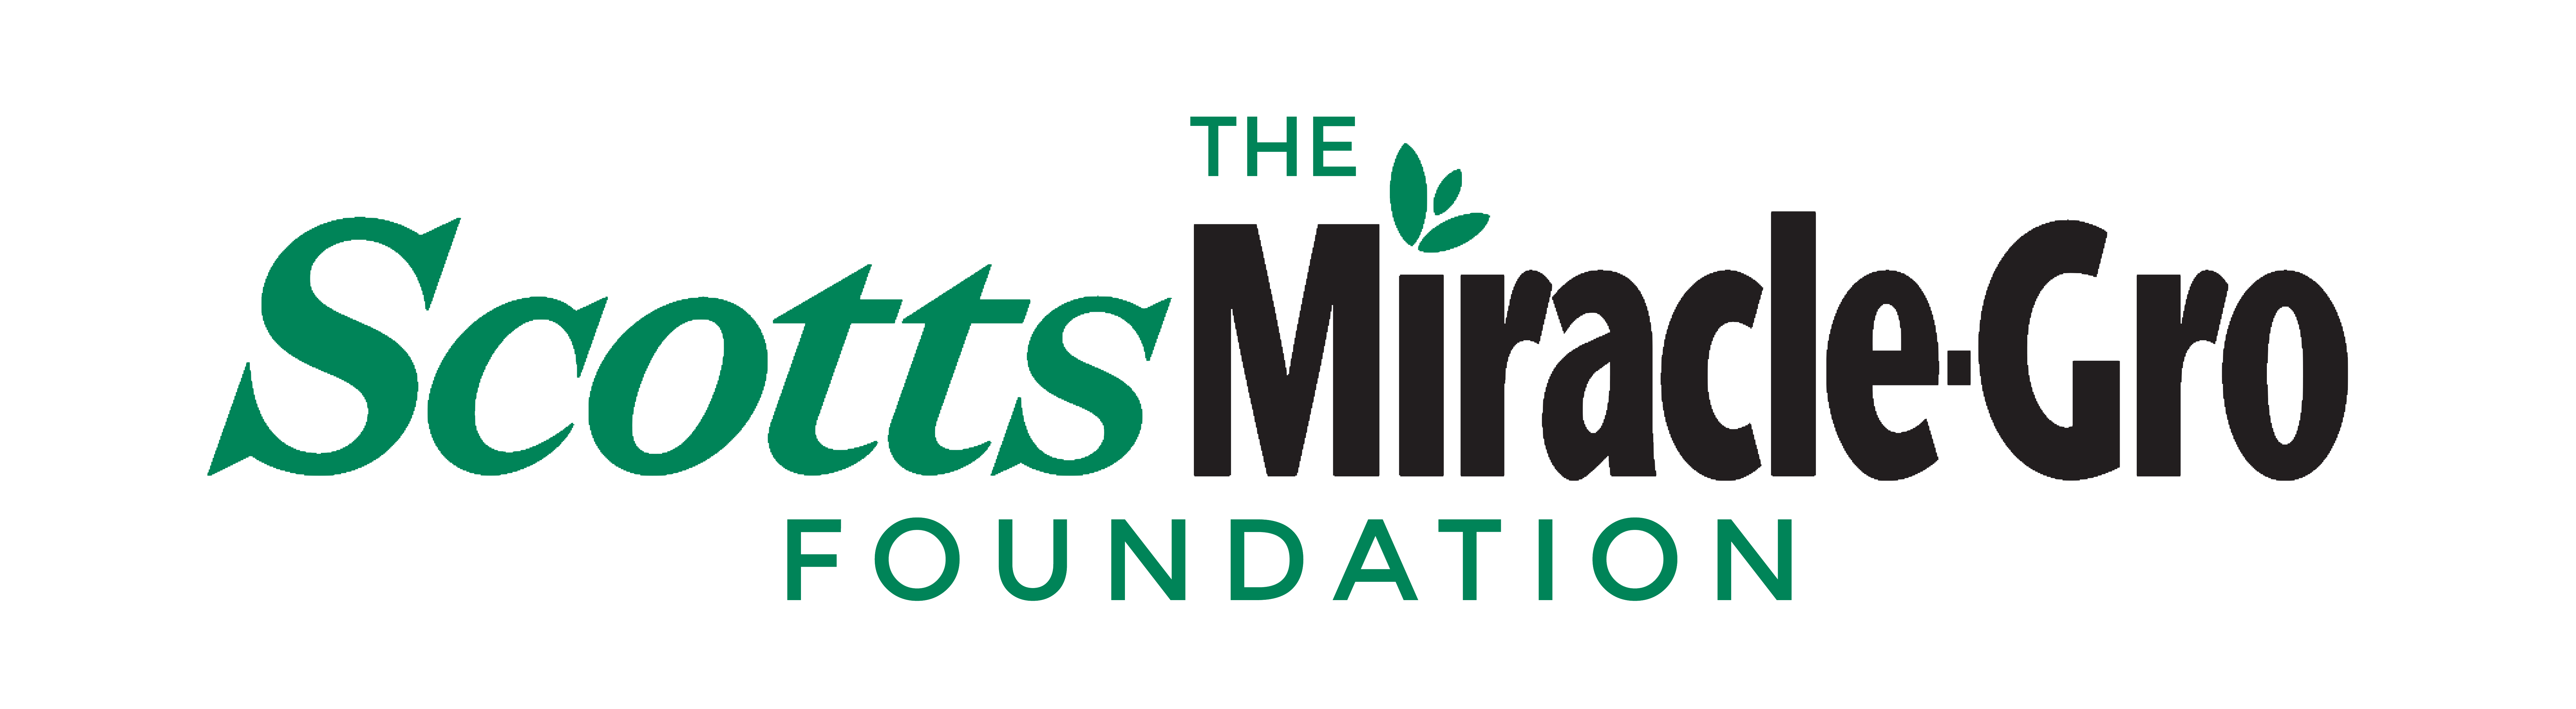 SMG Foundation logo (6)